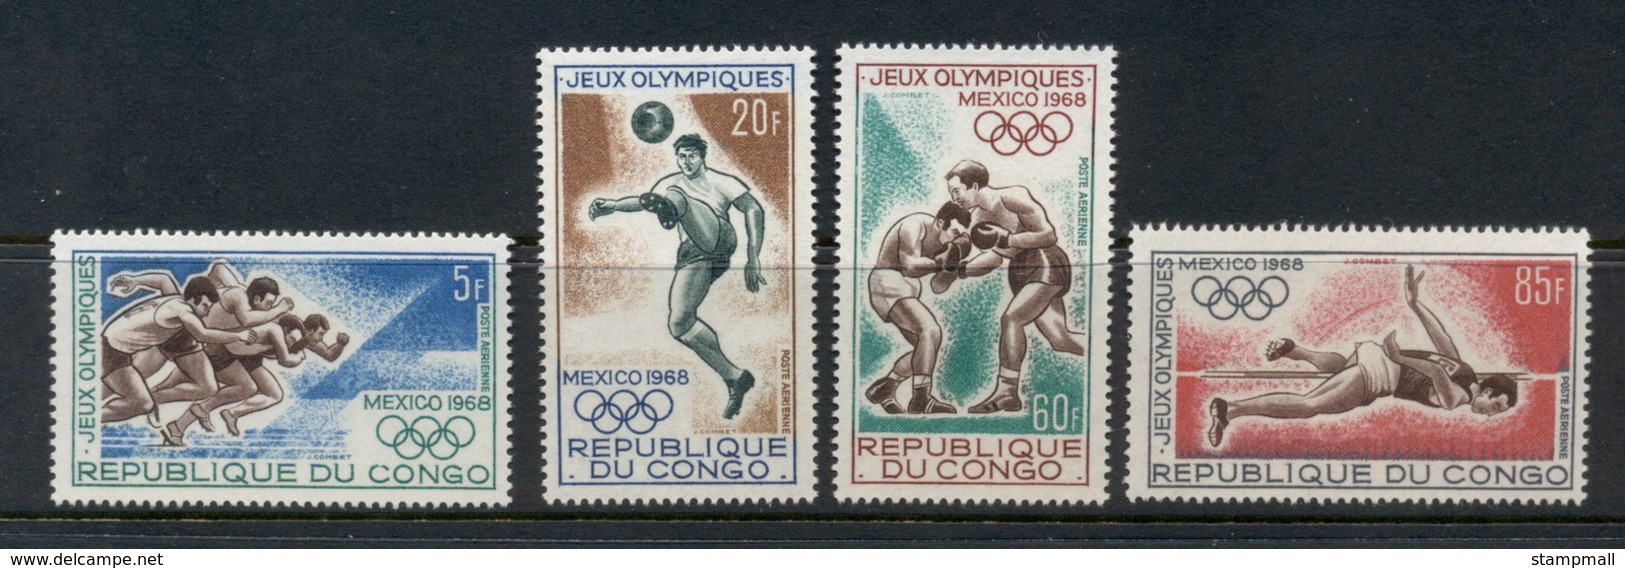 Congo PR 1968 Summer Olympics Mexico City MUH - Mint/hinged